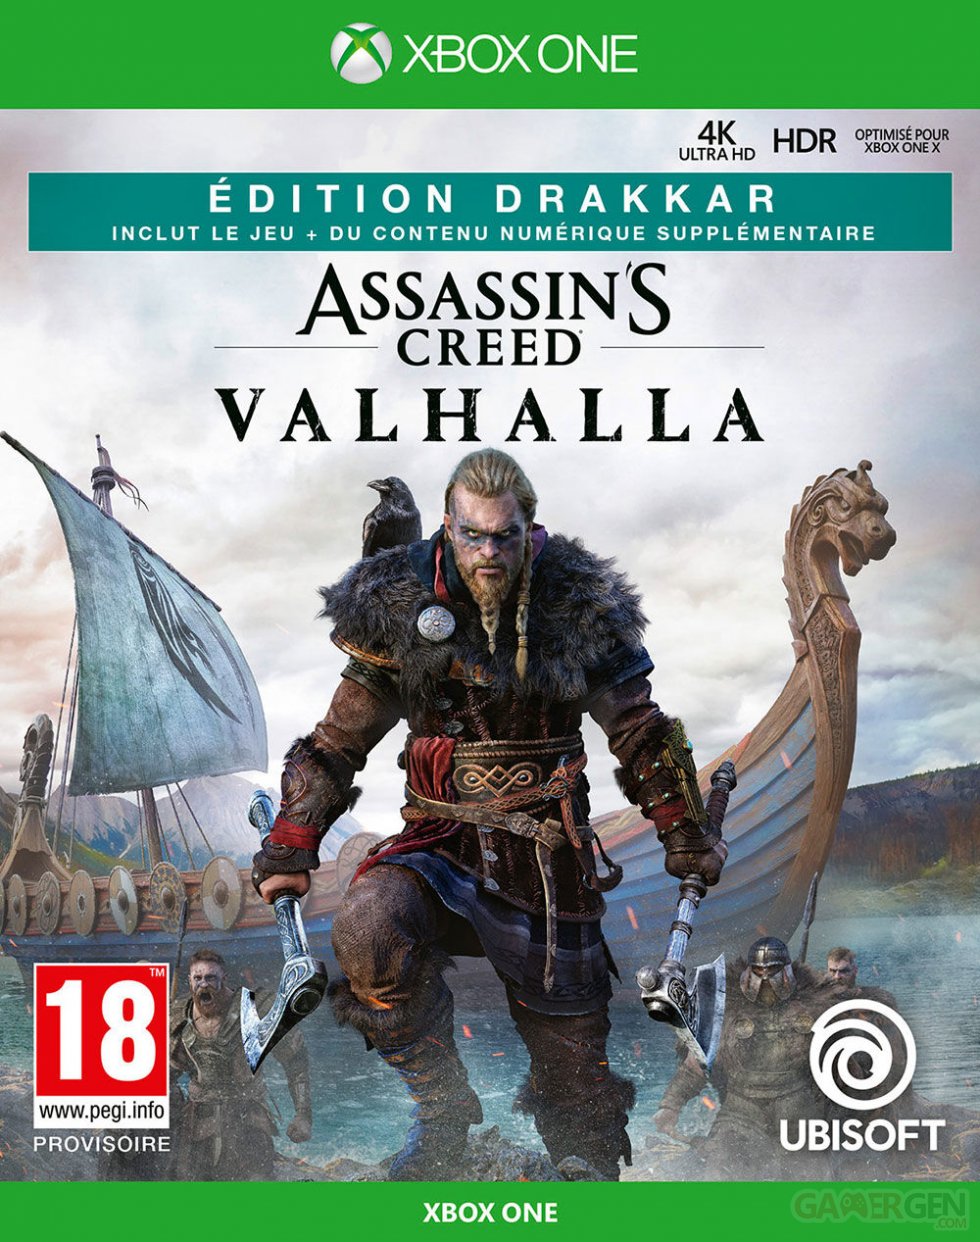 Assassin's-Creed-Valhalla-édition-Drakkar-Micromania-jaquette-Xbox-One-01-05-2020